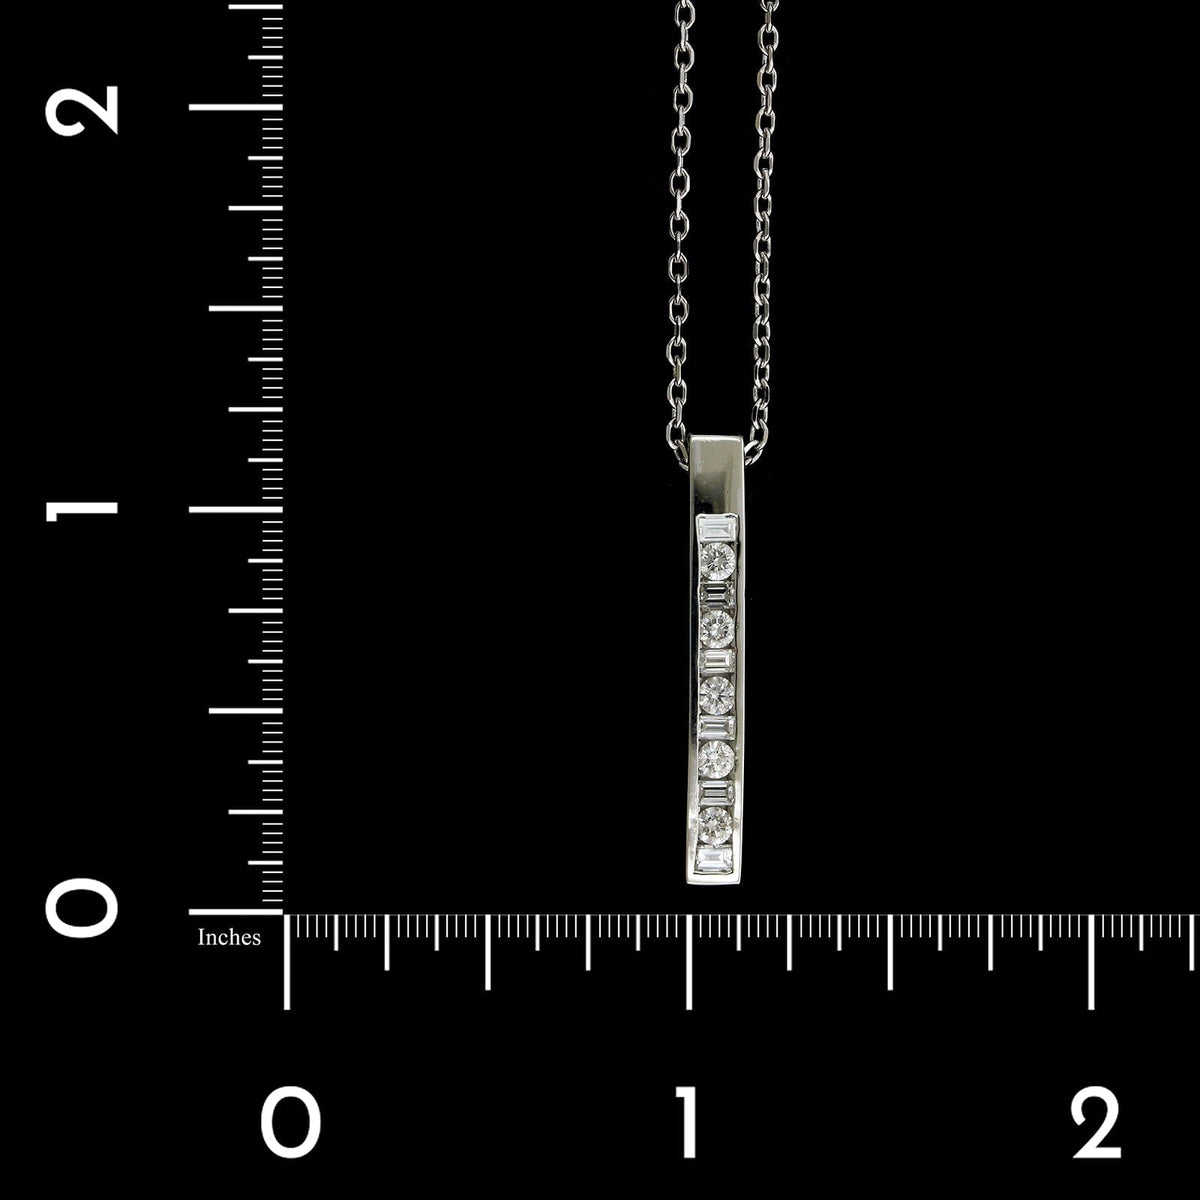 Platinum Estate Diamond Bar Pendant Necklace